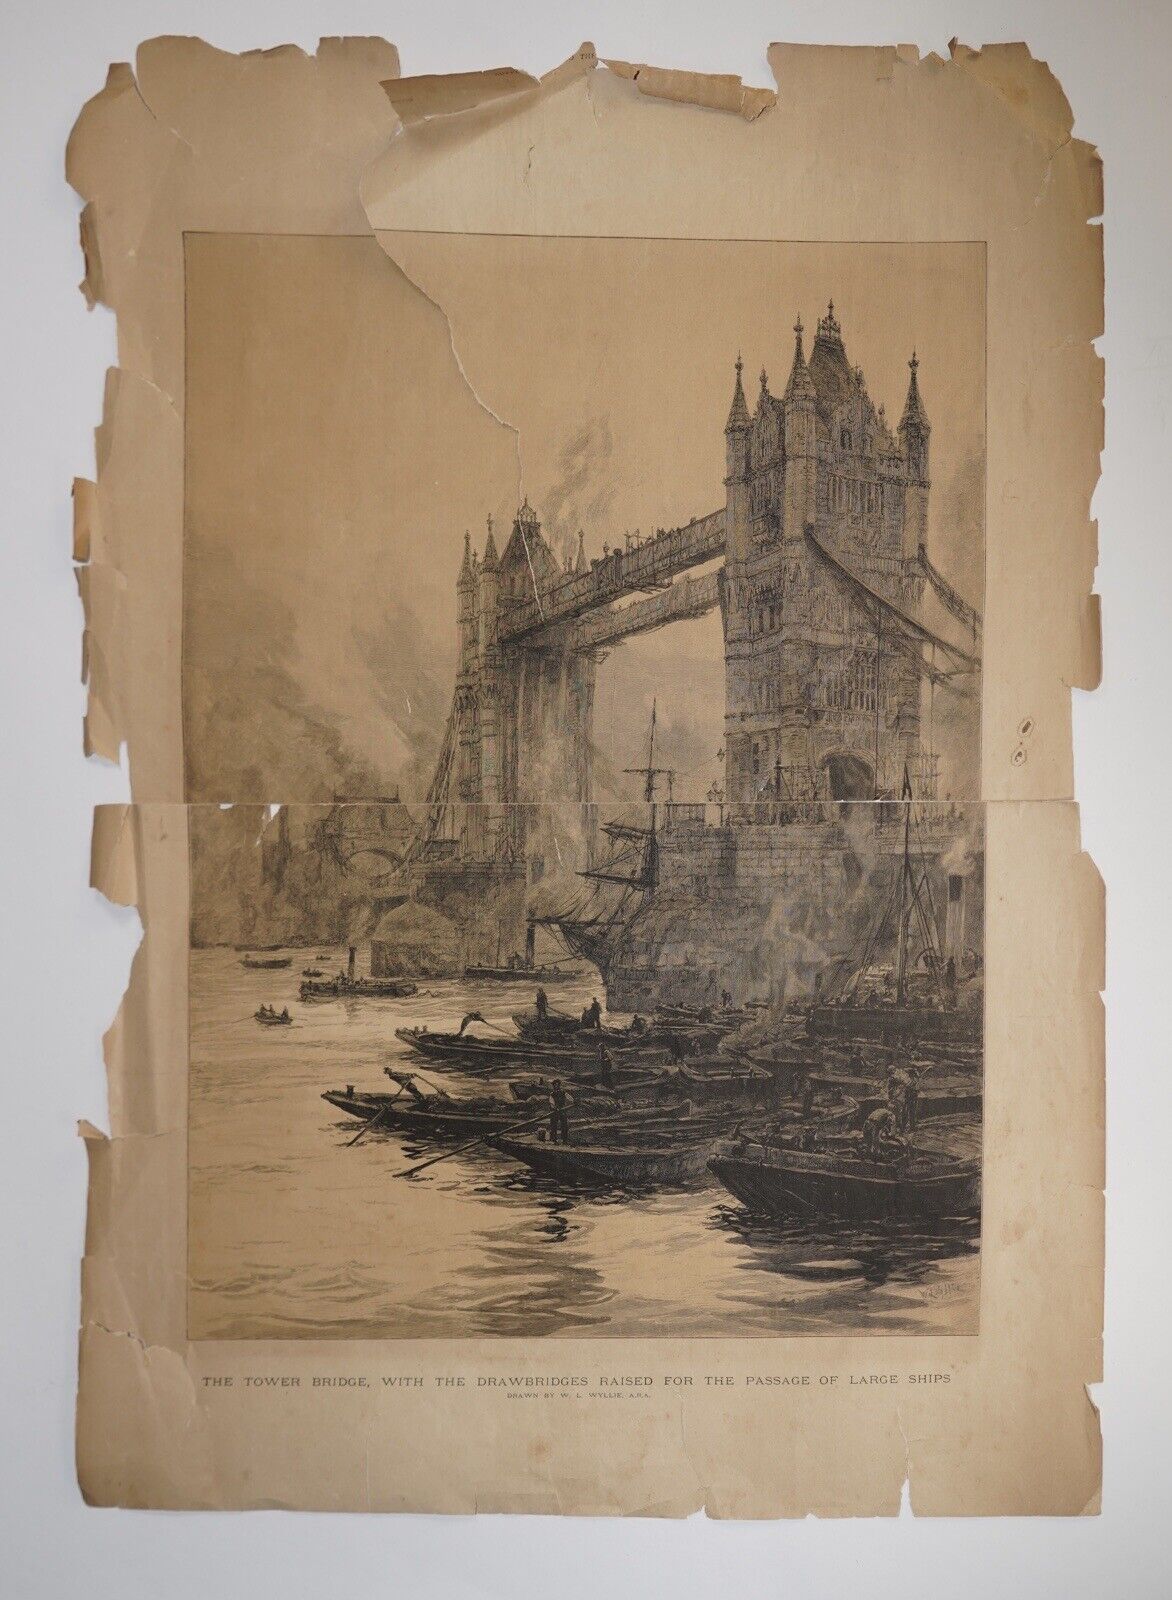 1894 The British Graphic Weekly Art Litho Insert “The Tower Bridge” (23”x16.25”)